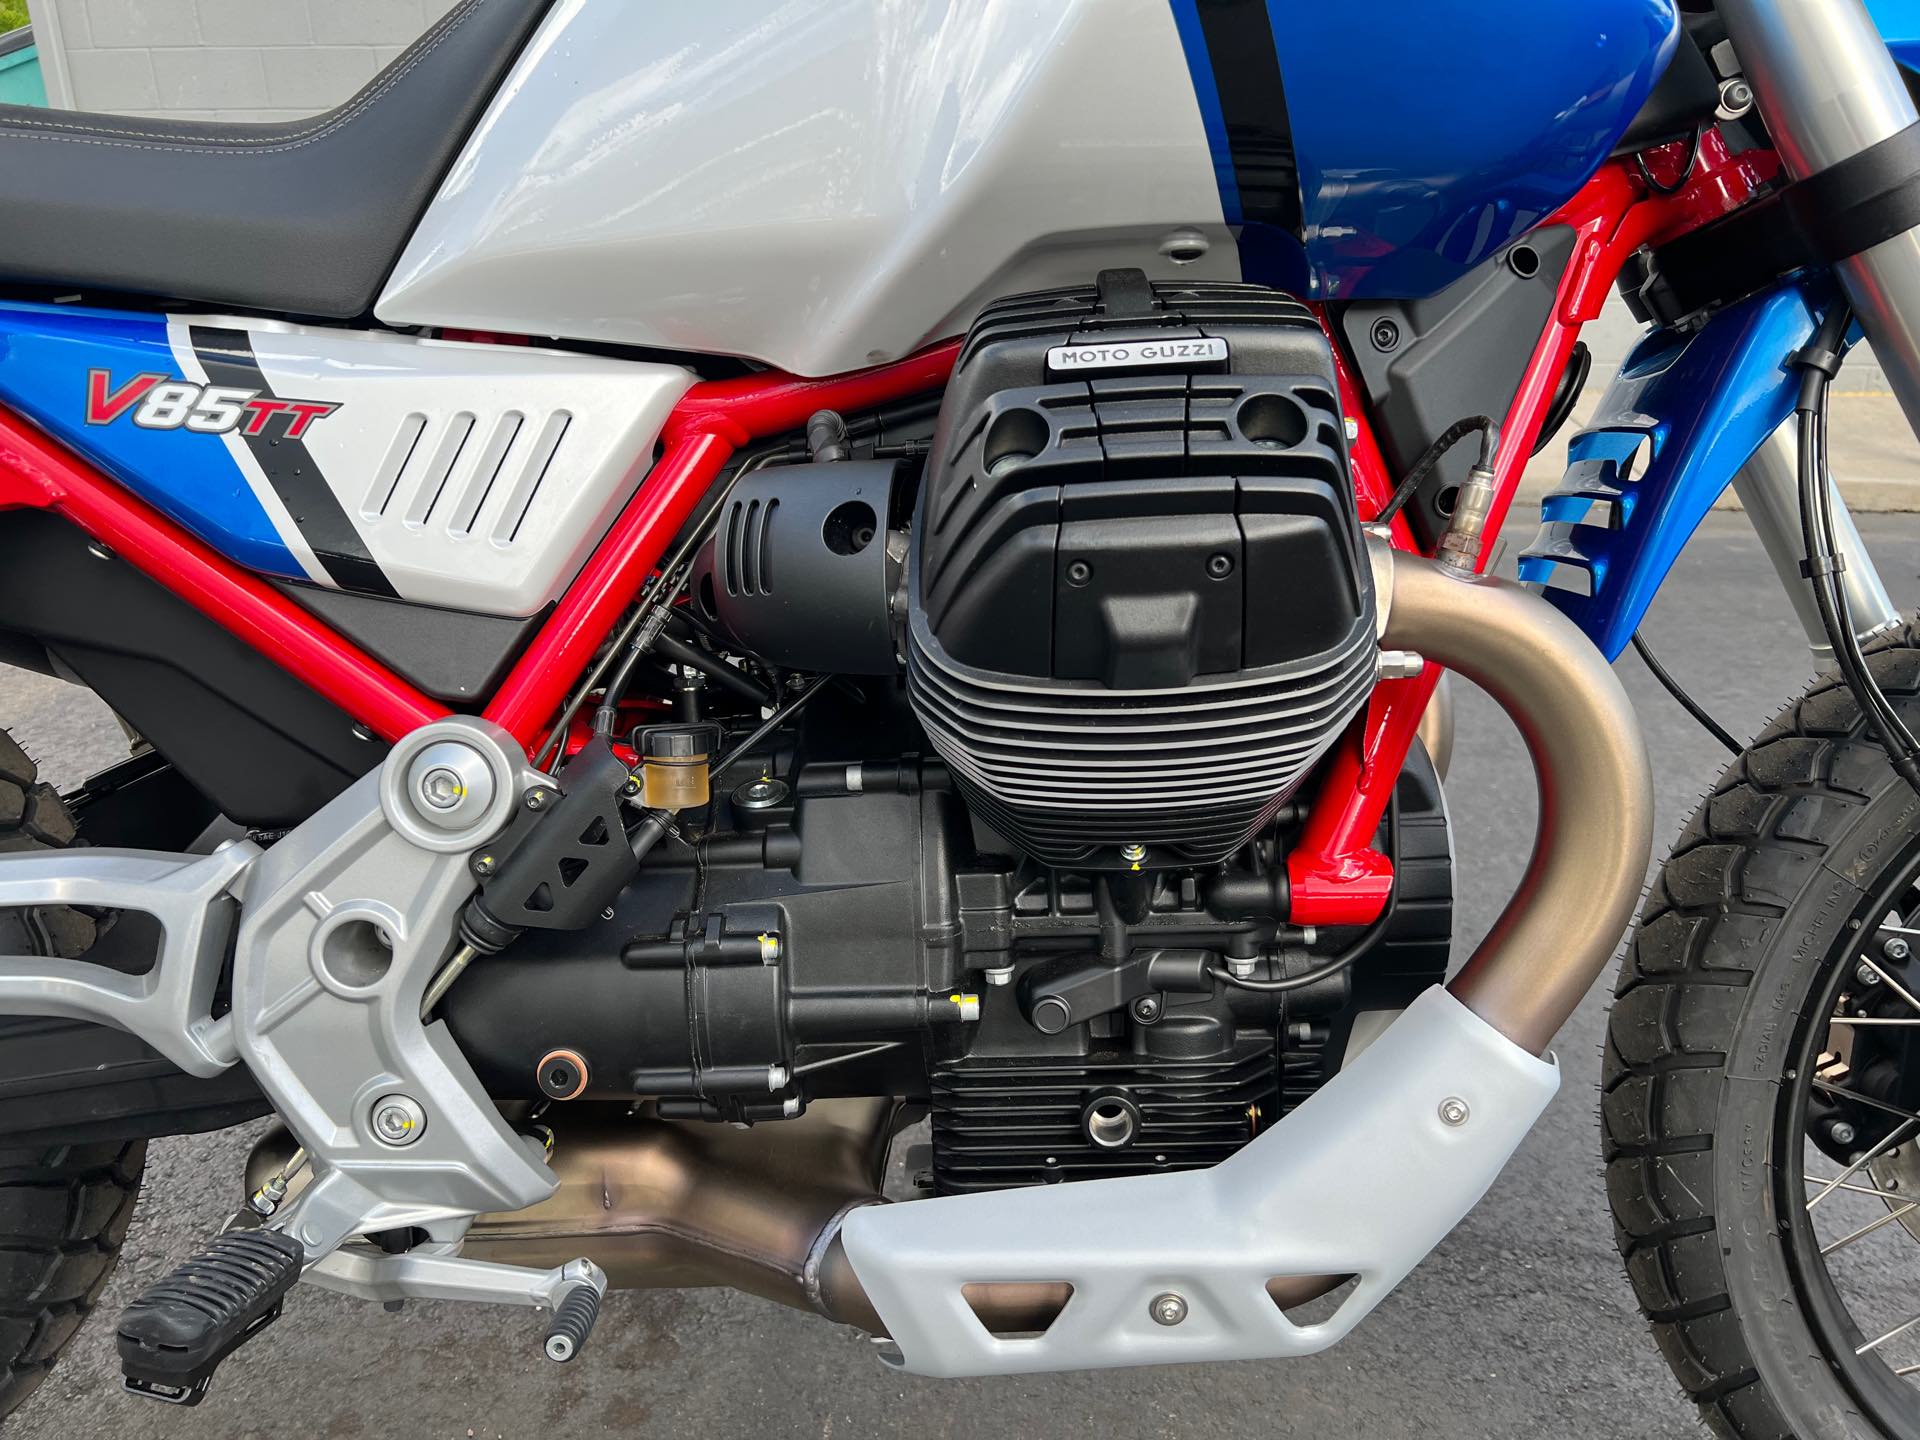 2023 Moto Guzzi V85 TT Adventure at Aces Motorcycles - Fort Collins